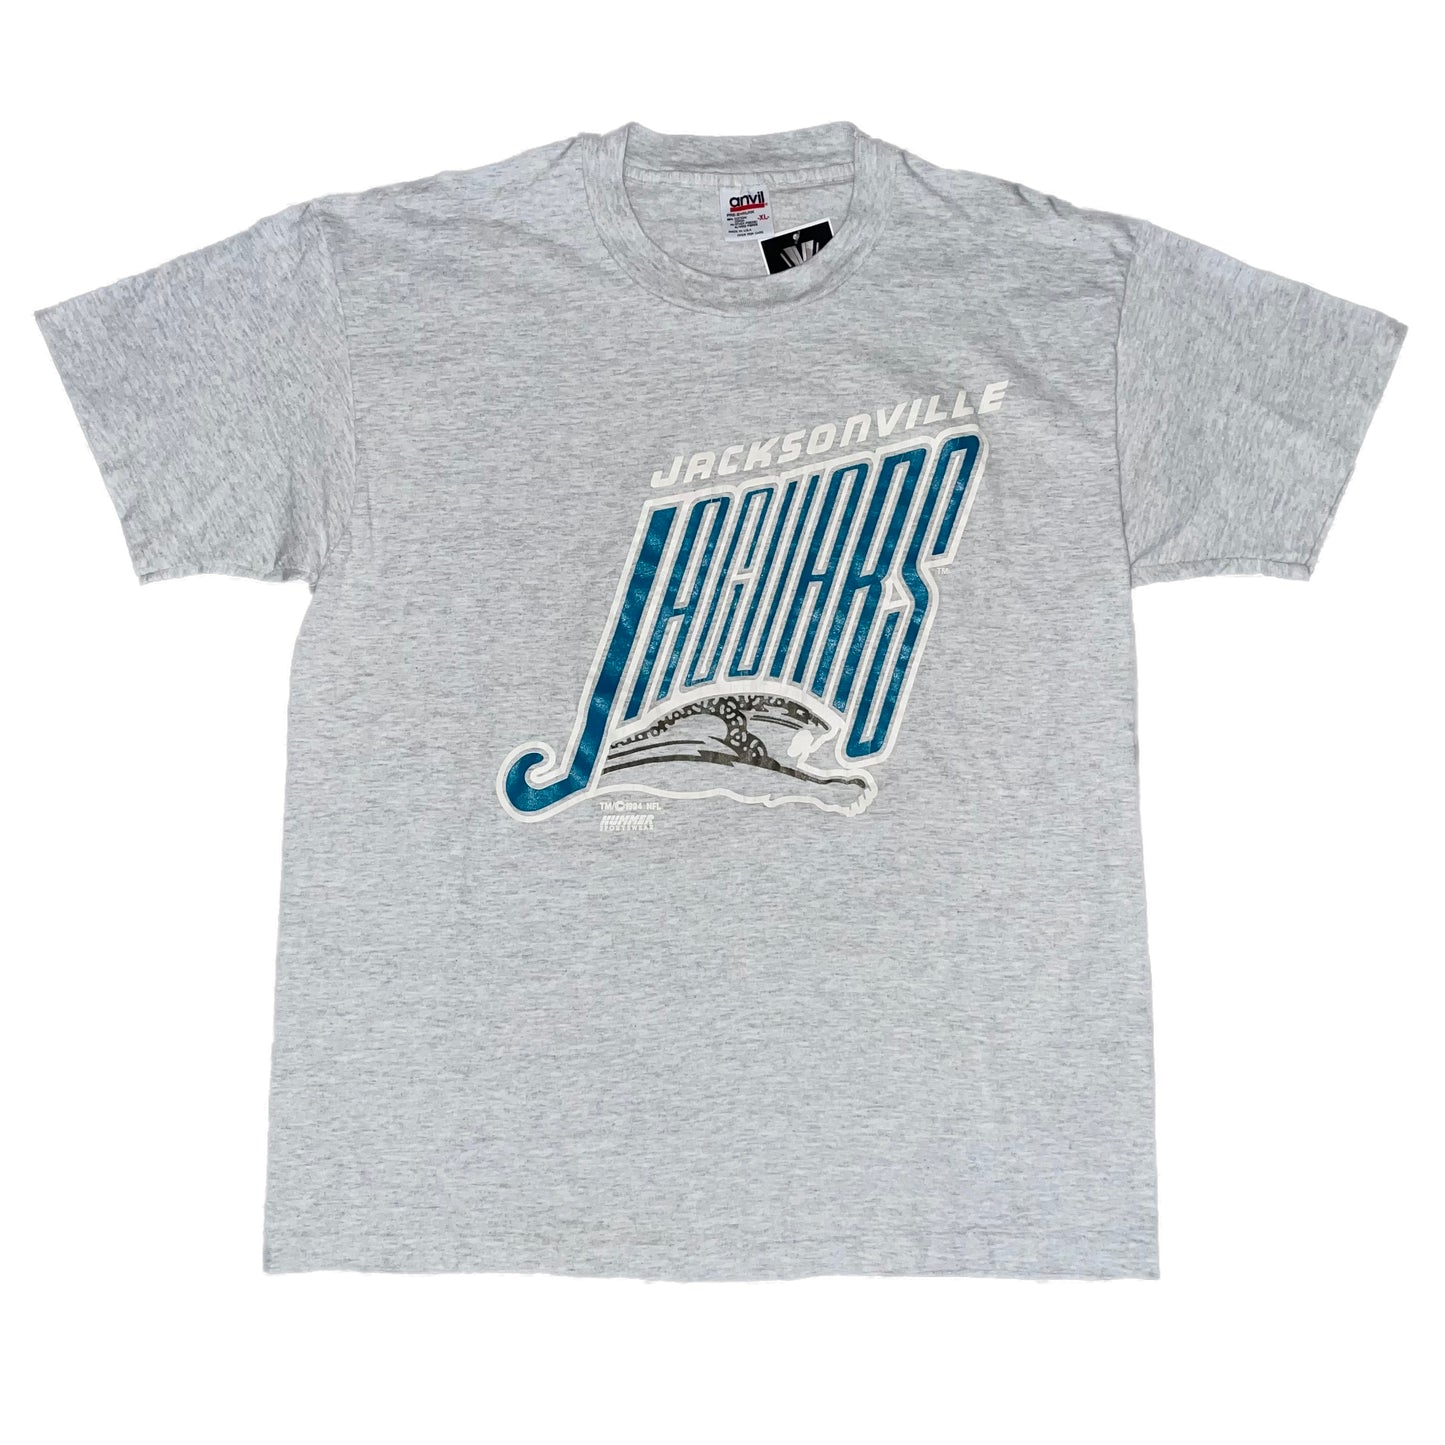 Jacksonville Jaguars 1994 banned logo shirt XL